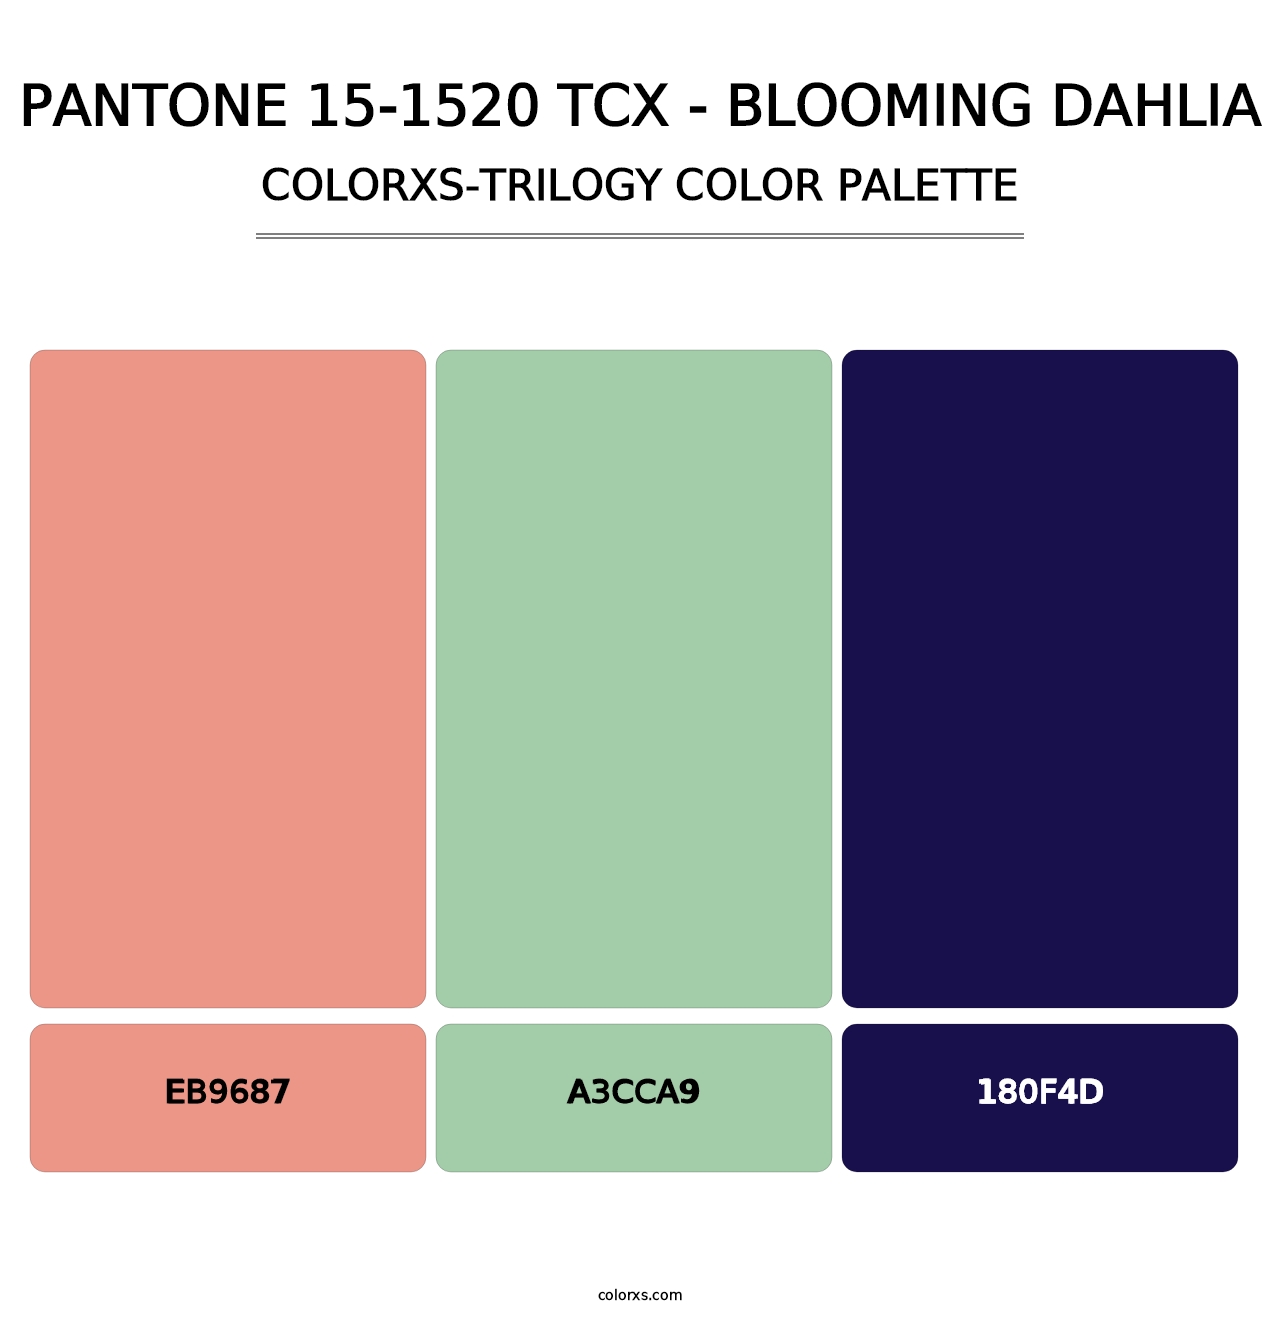 PANTONE 15-1520 TCX - Blooming Dahlia - Colorxs Trilogy Palette